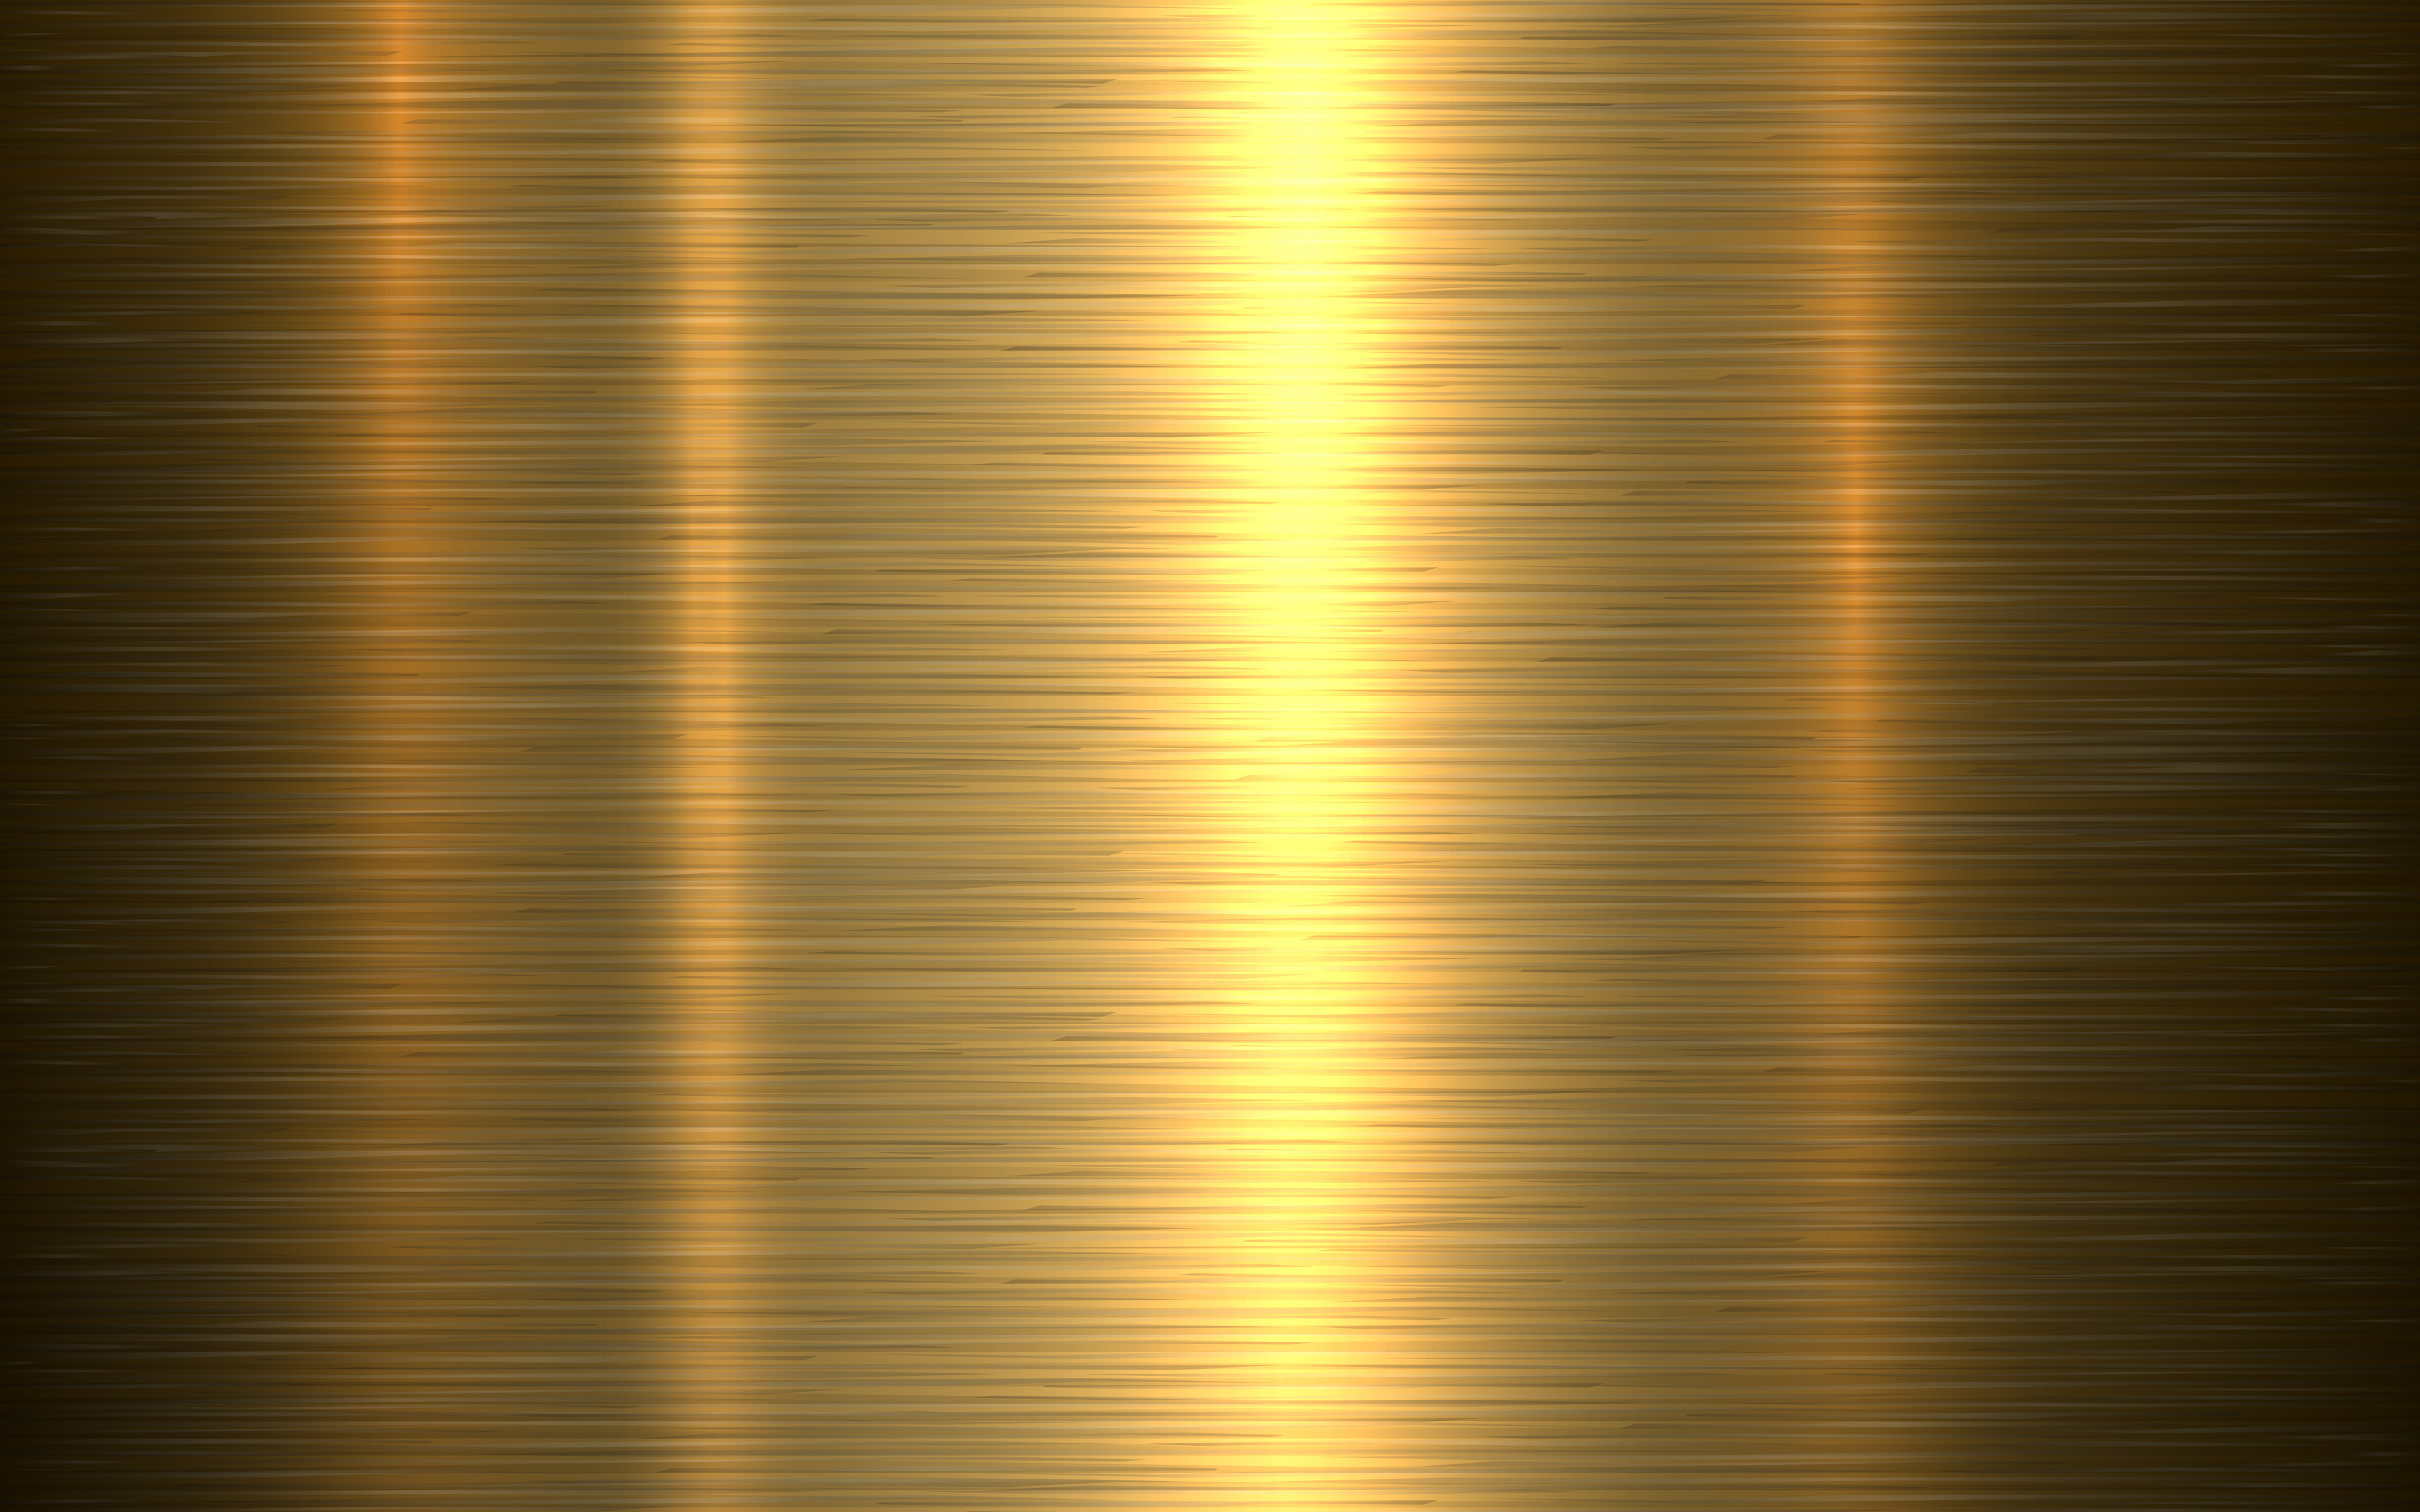 Brushed gold. Золото текстура. Текстура золотого металла. Золотистый металл. Фон золото металл.